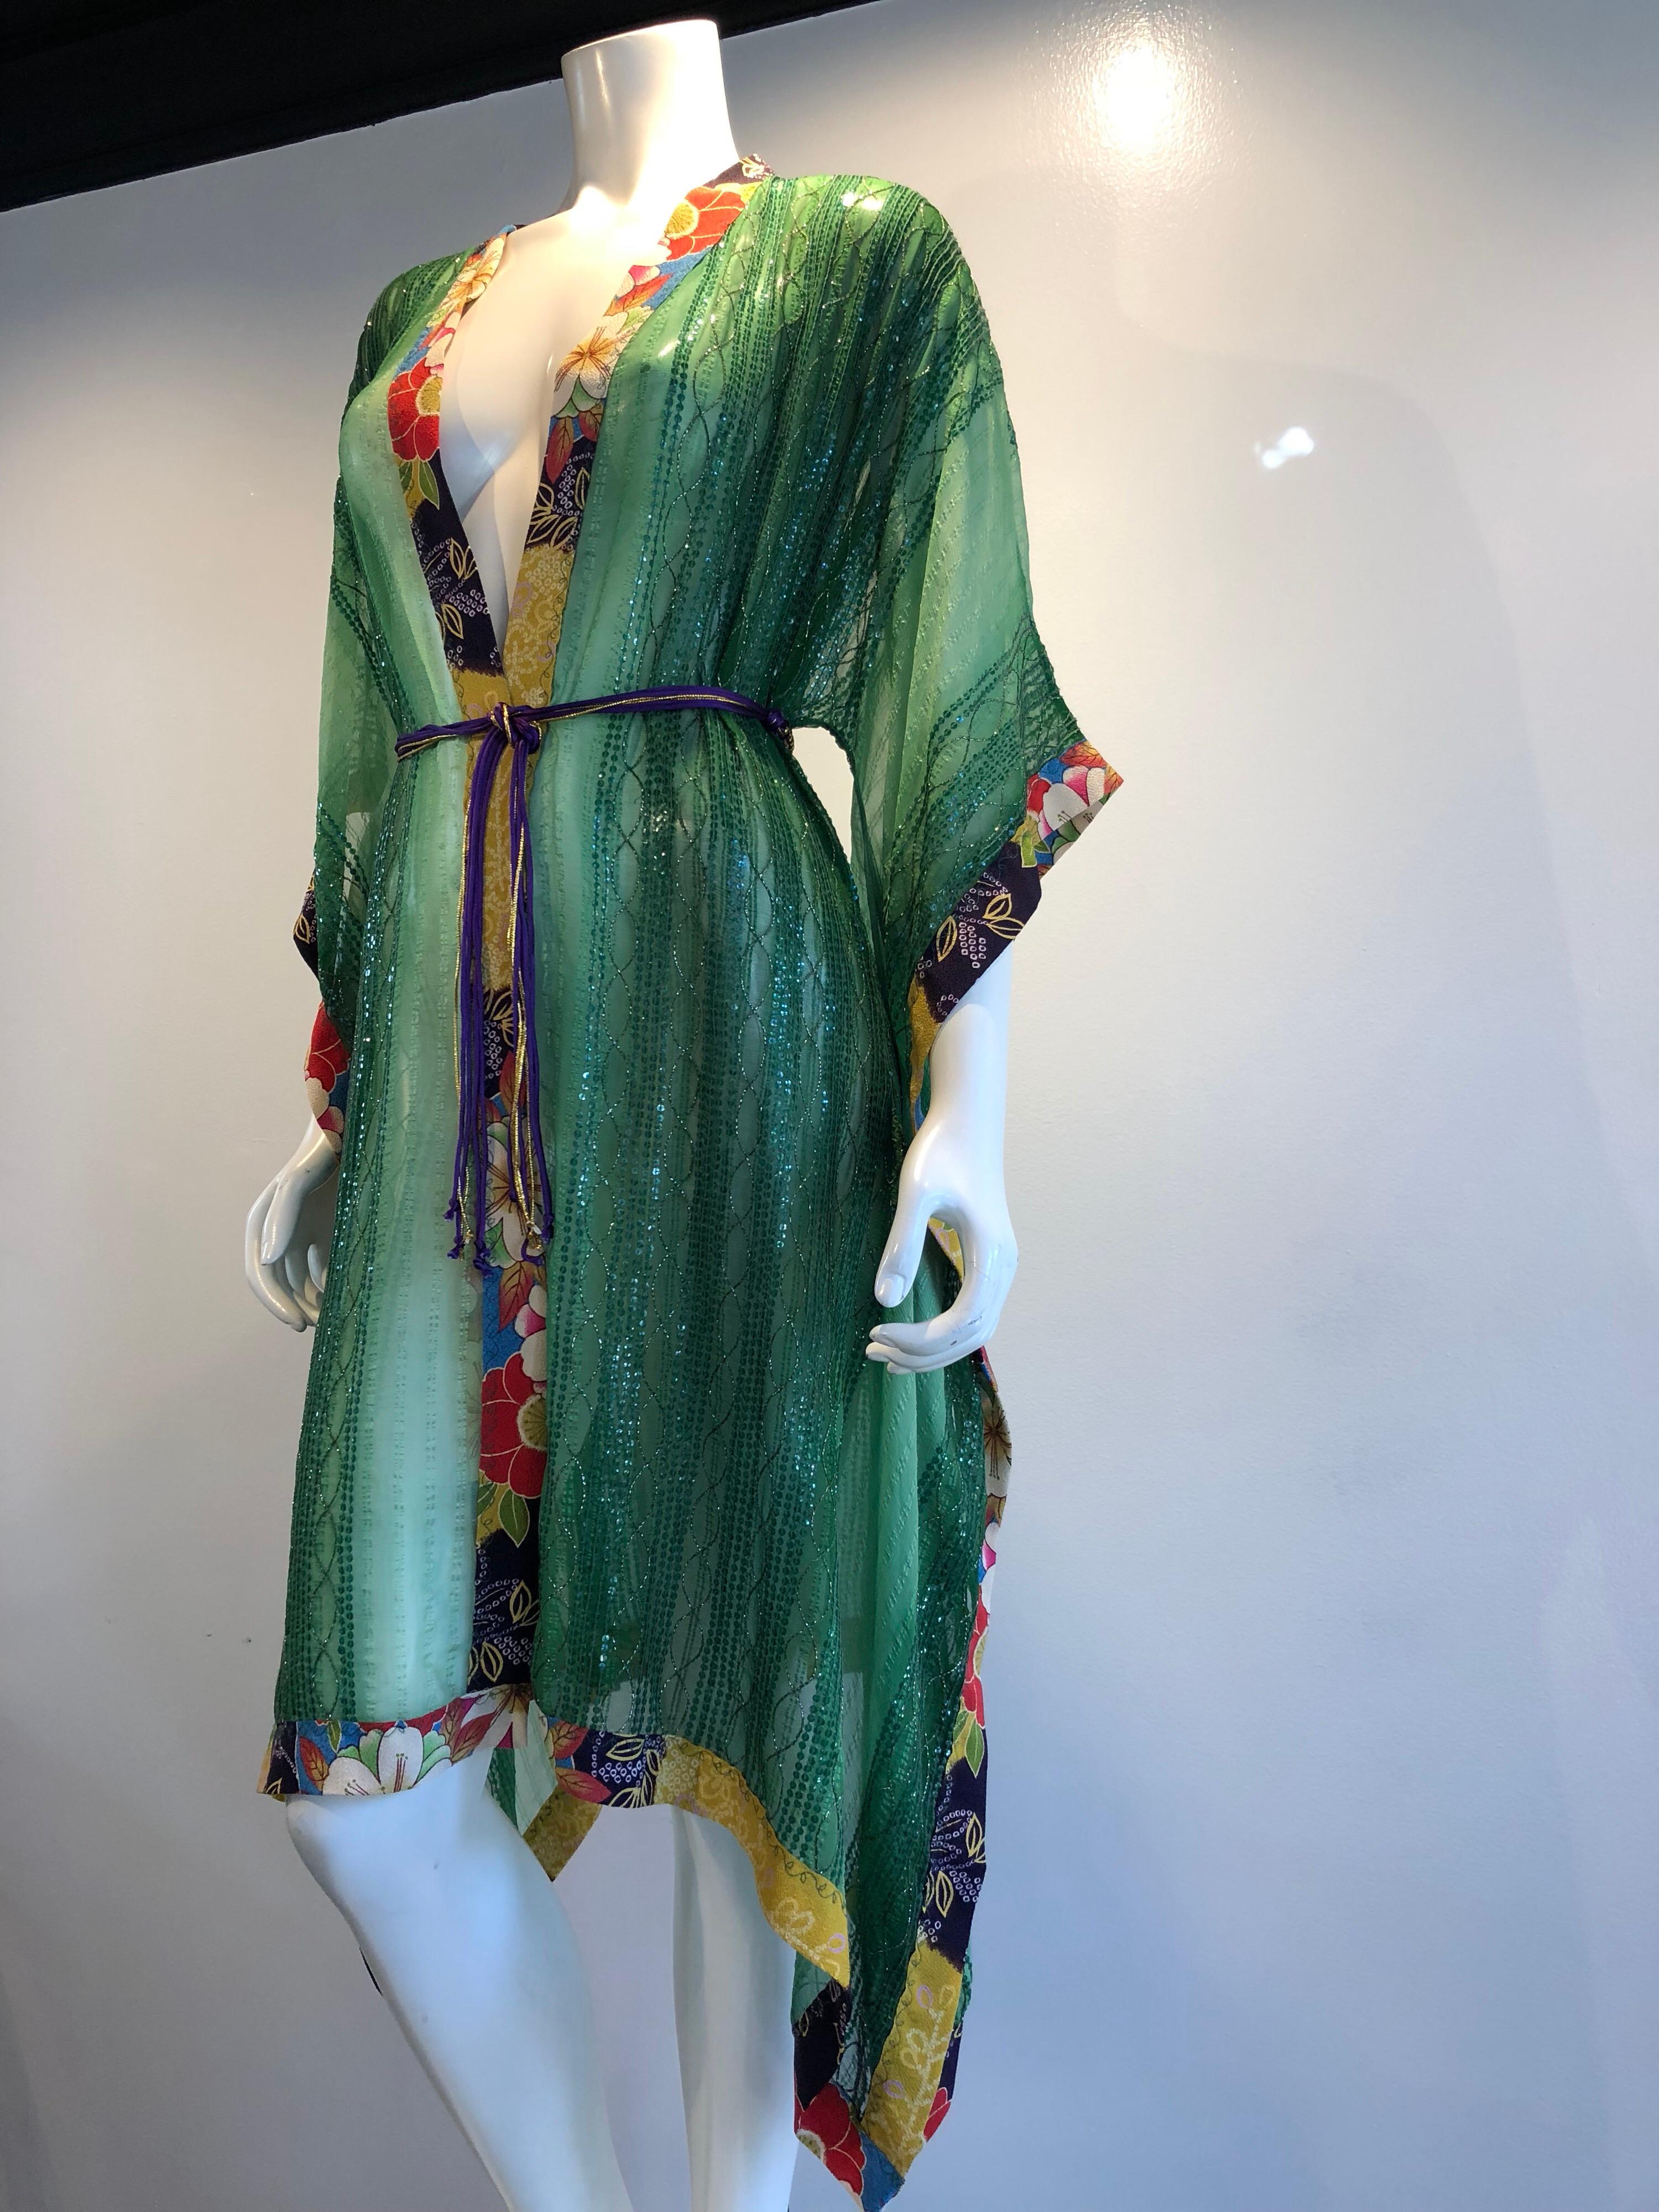 Torso Creations Green Silk Chiffon Kimono-Style Jacket W/ Sequins & Obi Trim. Beautiful vintage textiles reimagined into this stunning lightweight duster jacket. Optional cord belt.